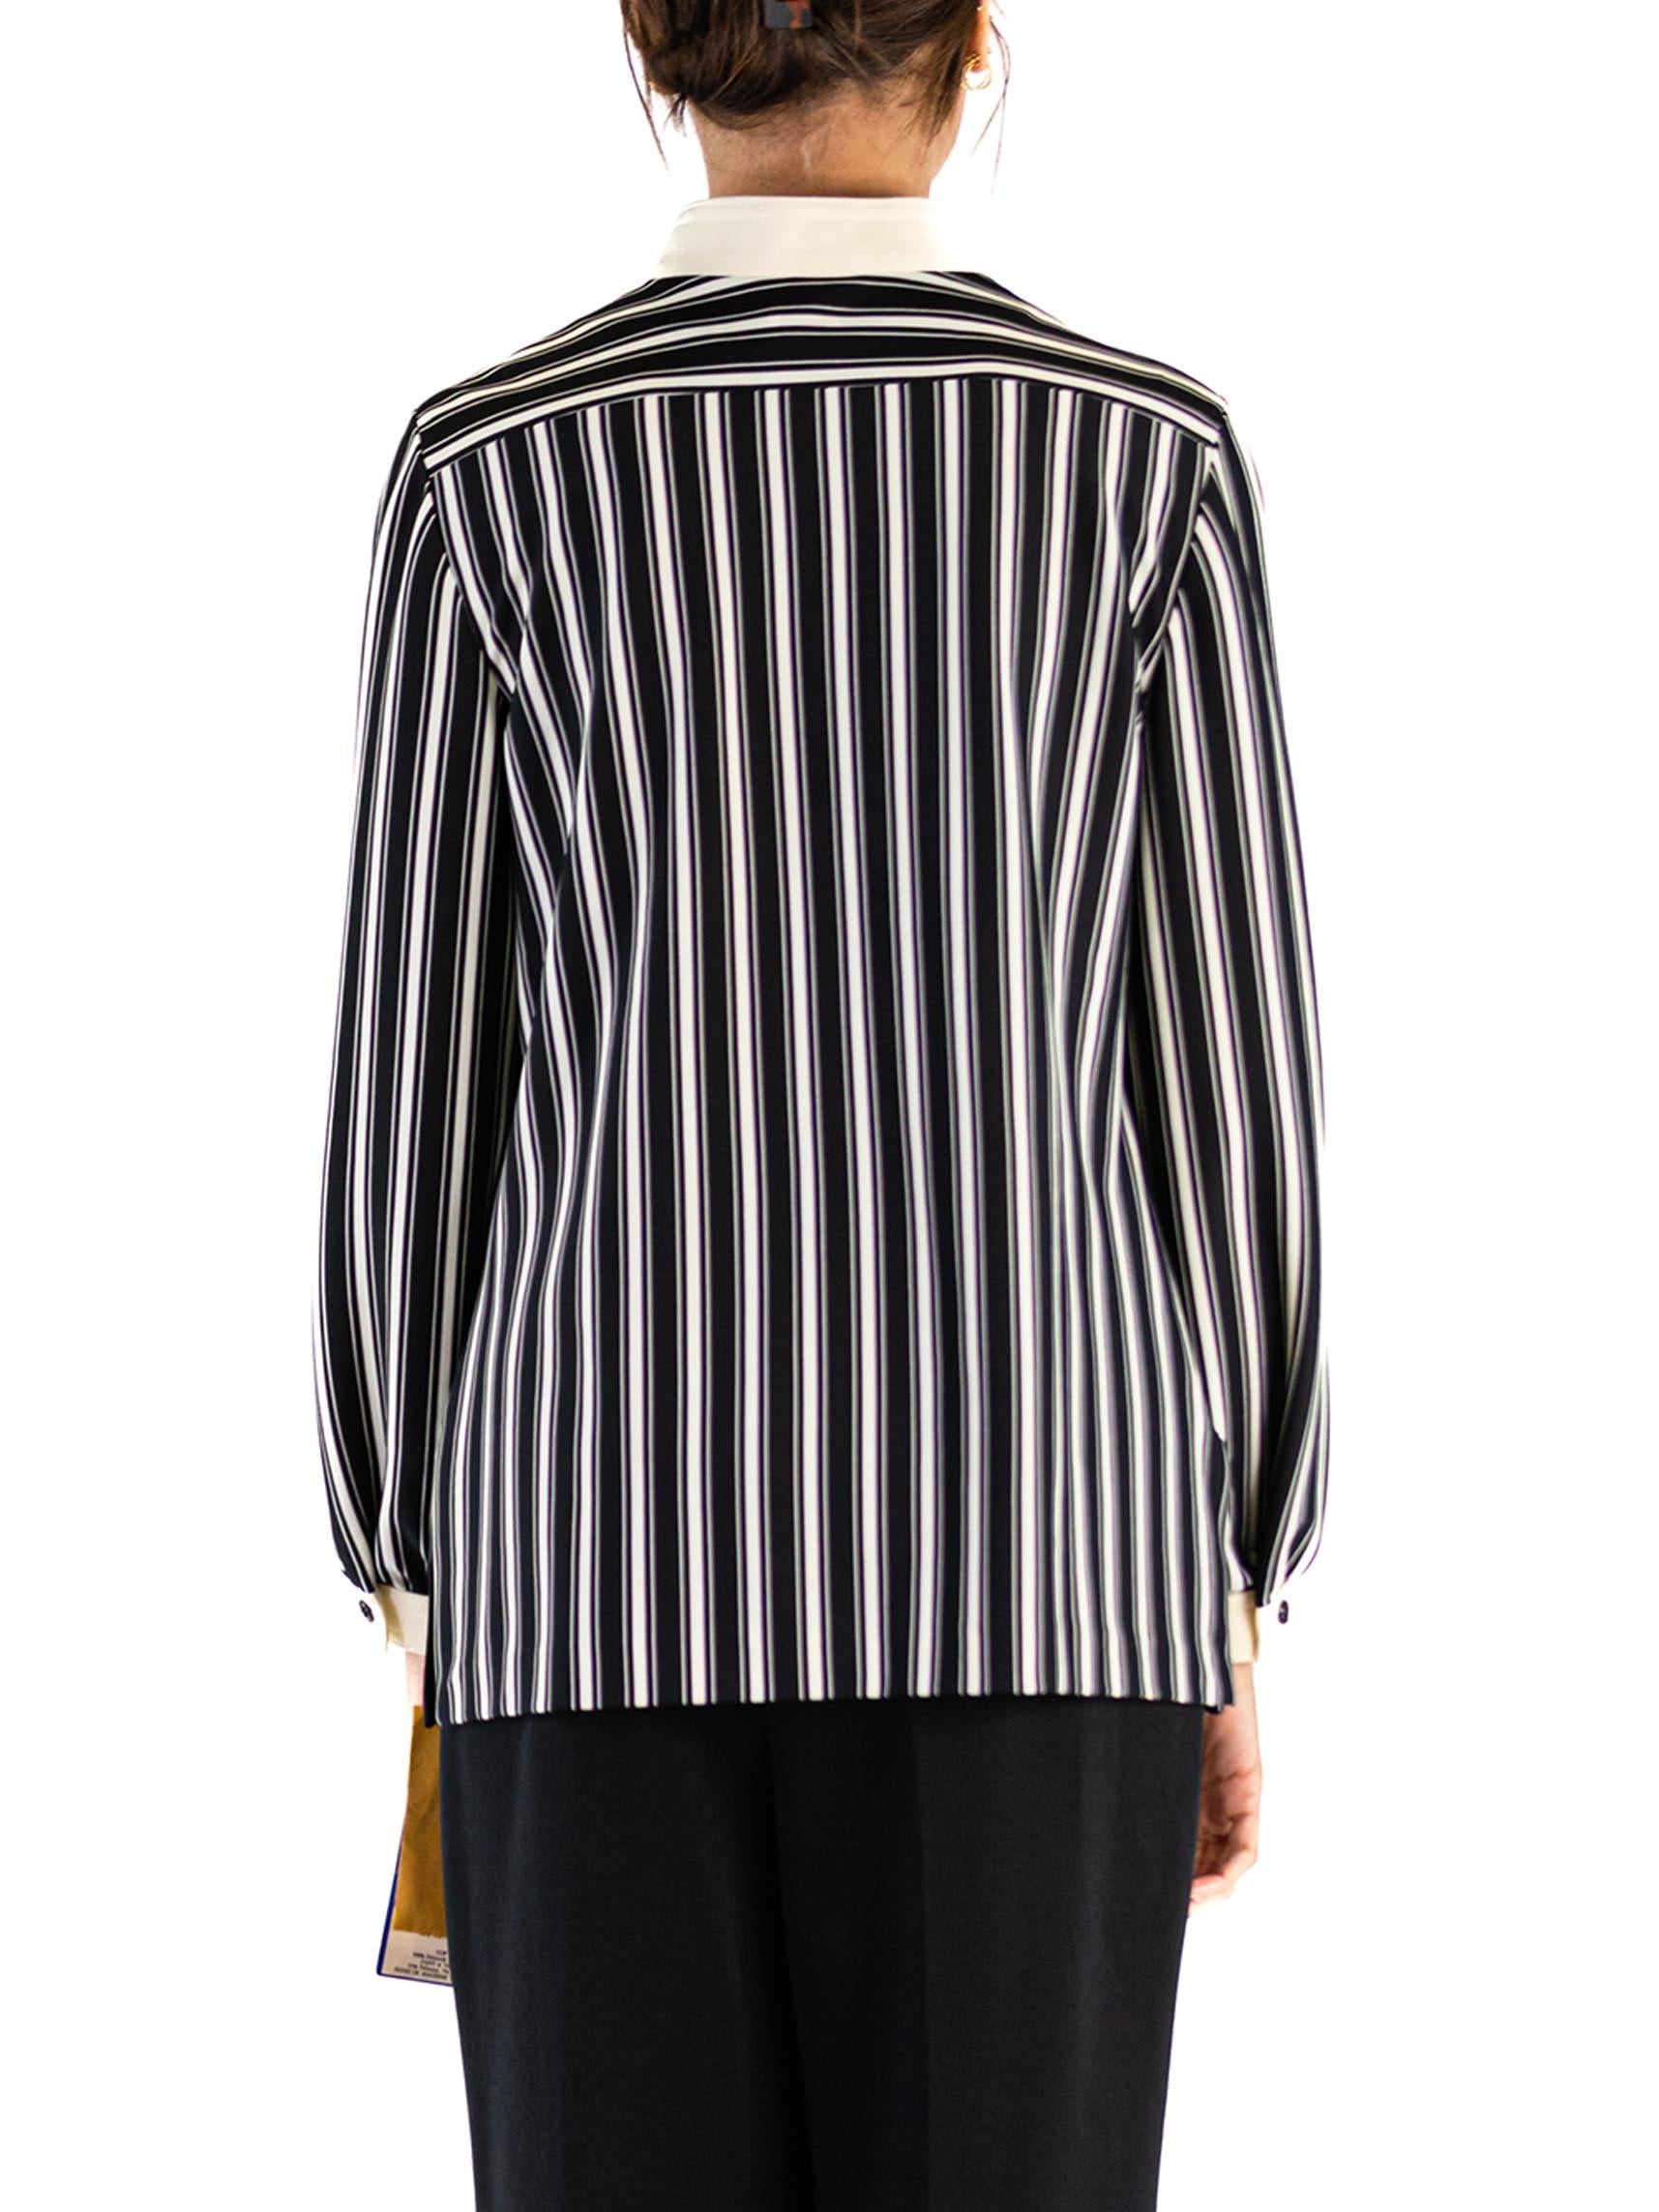 1960S Black & White Striped Polyester Double Knit Mod Shirt Pant Ensemble For Sale 1